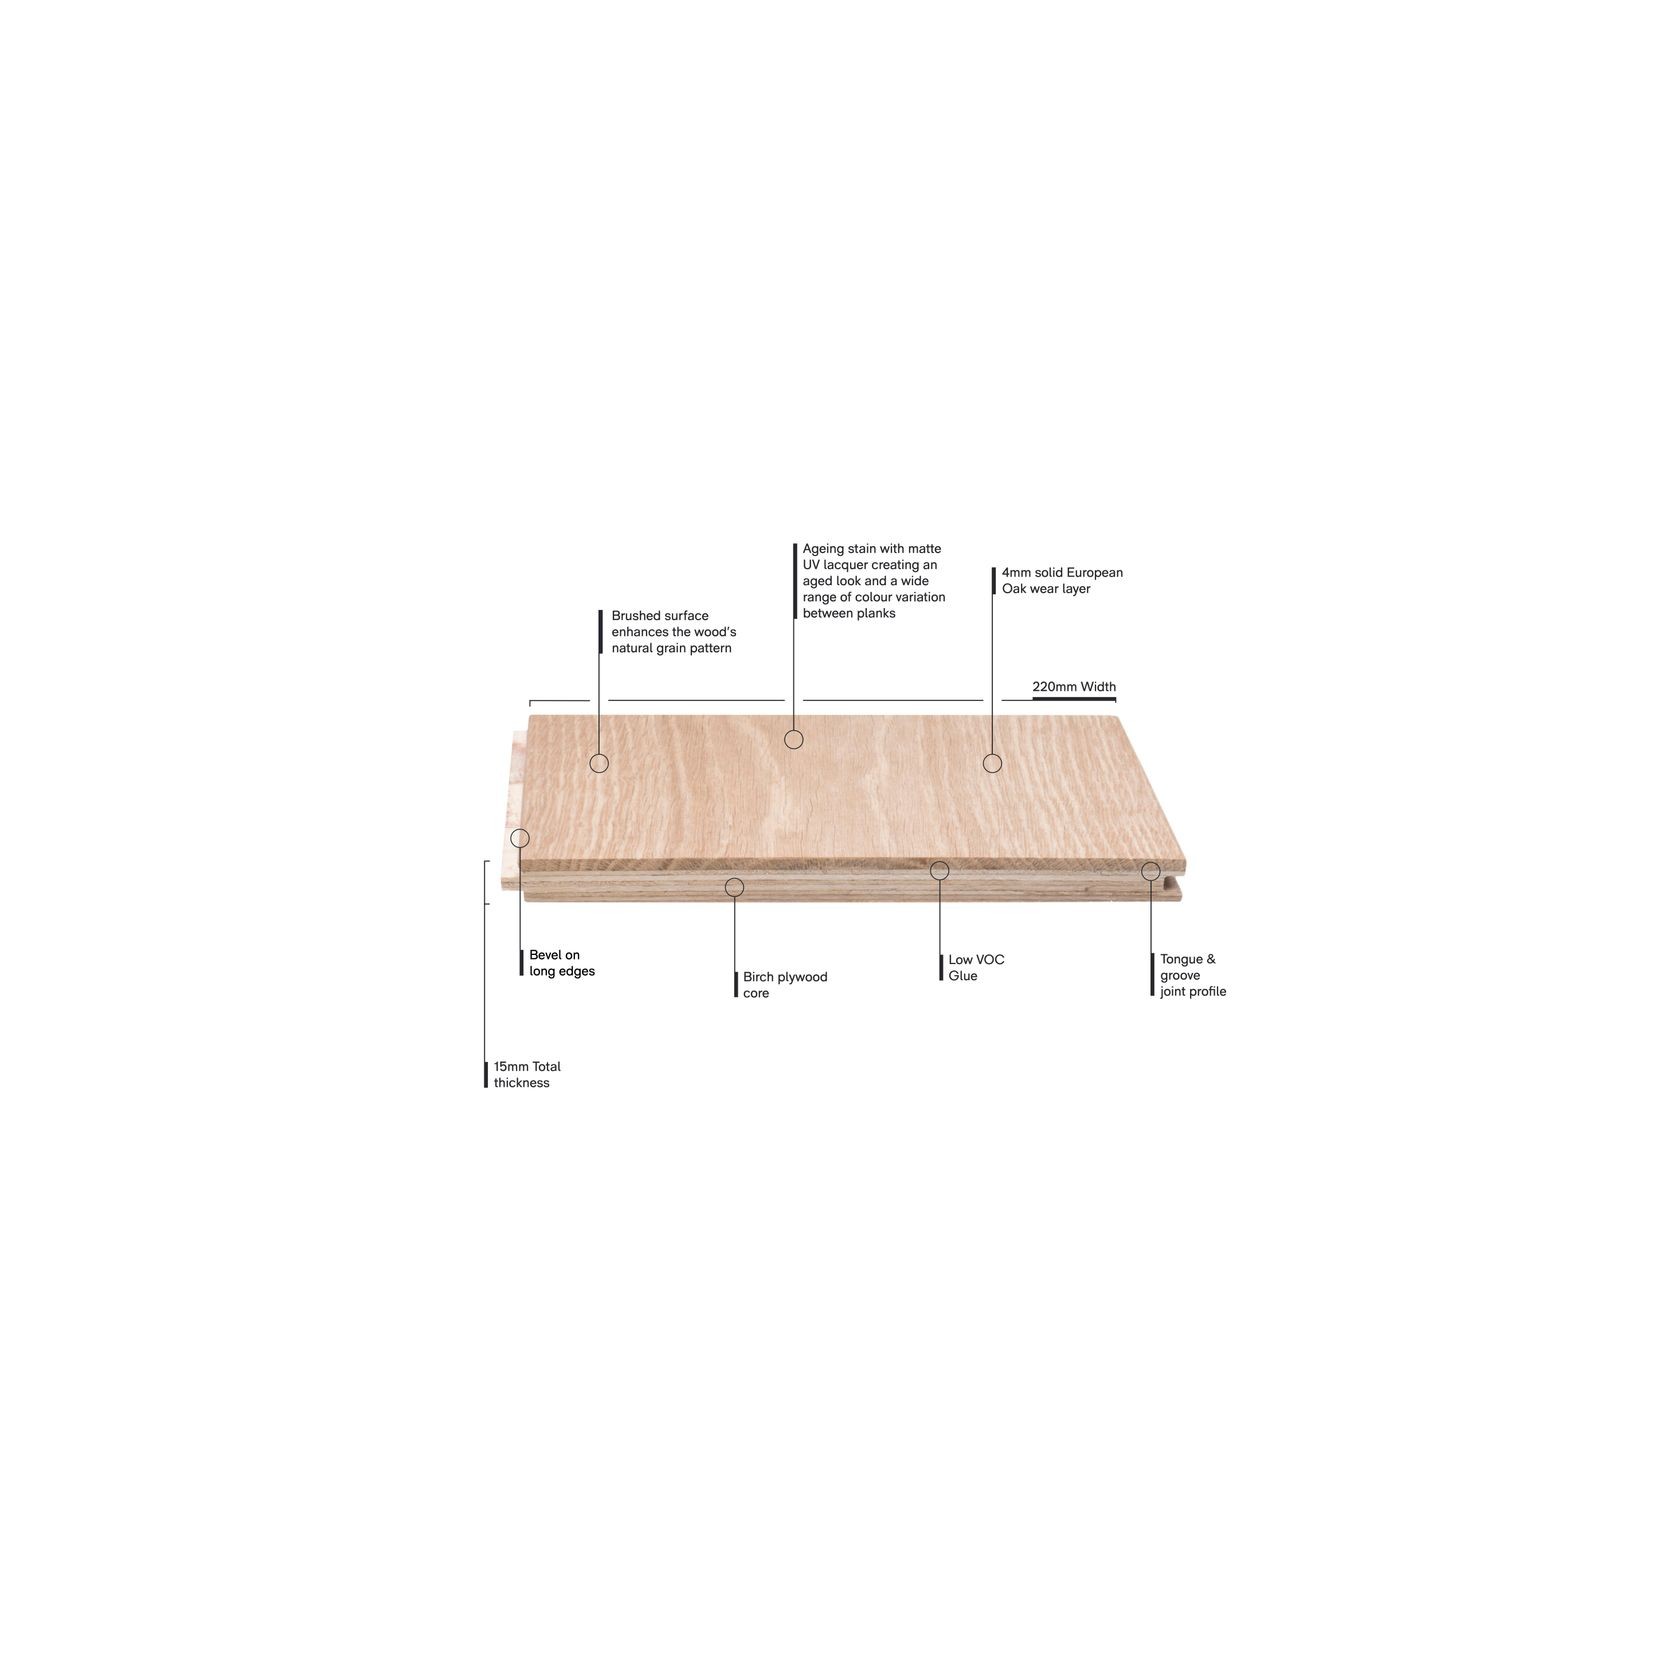 Atelier Marl Timber Flooring gallery detail image